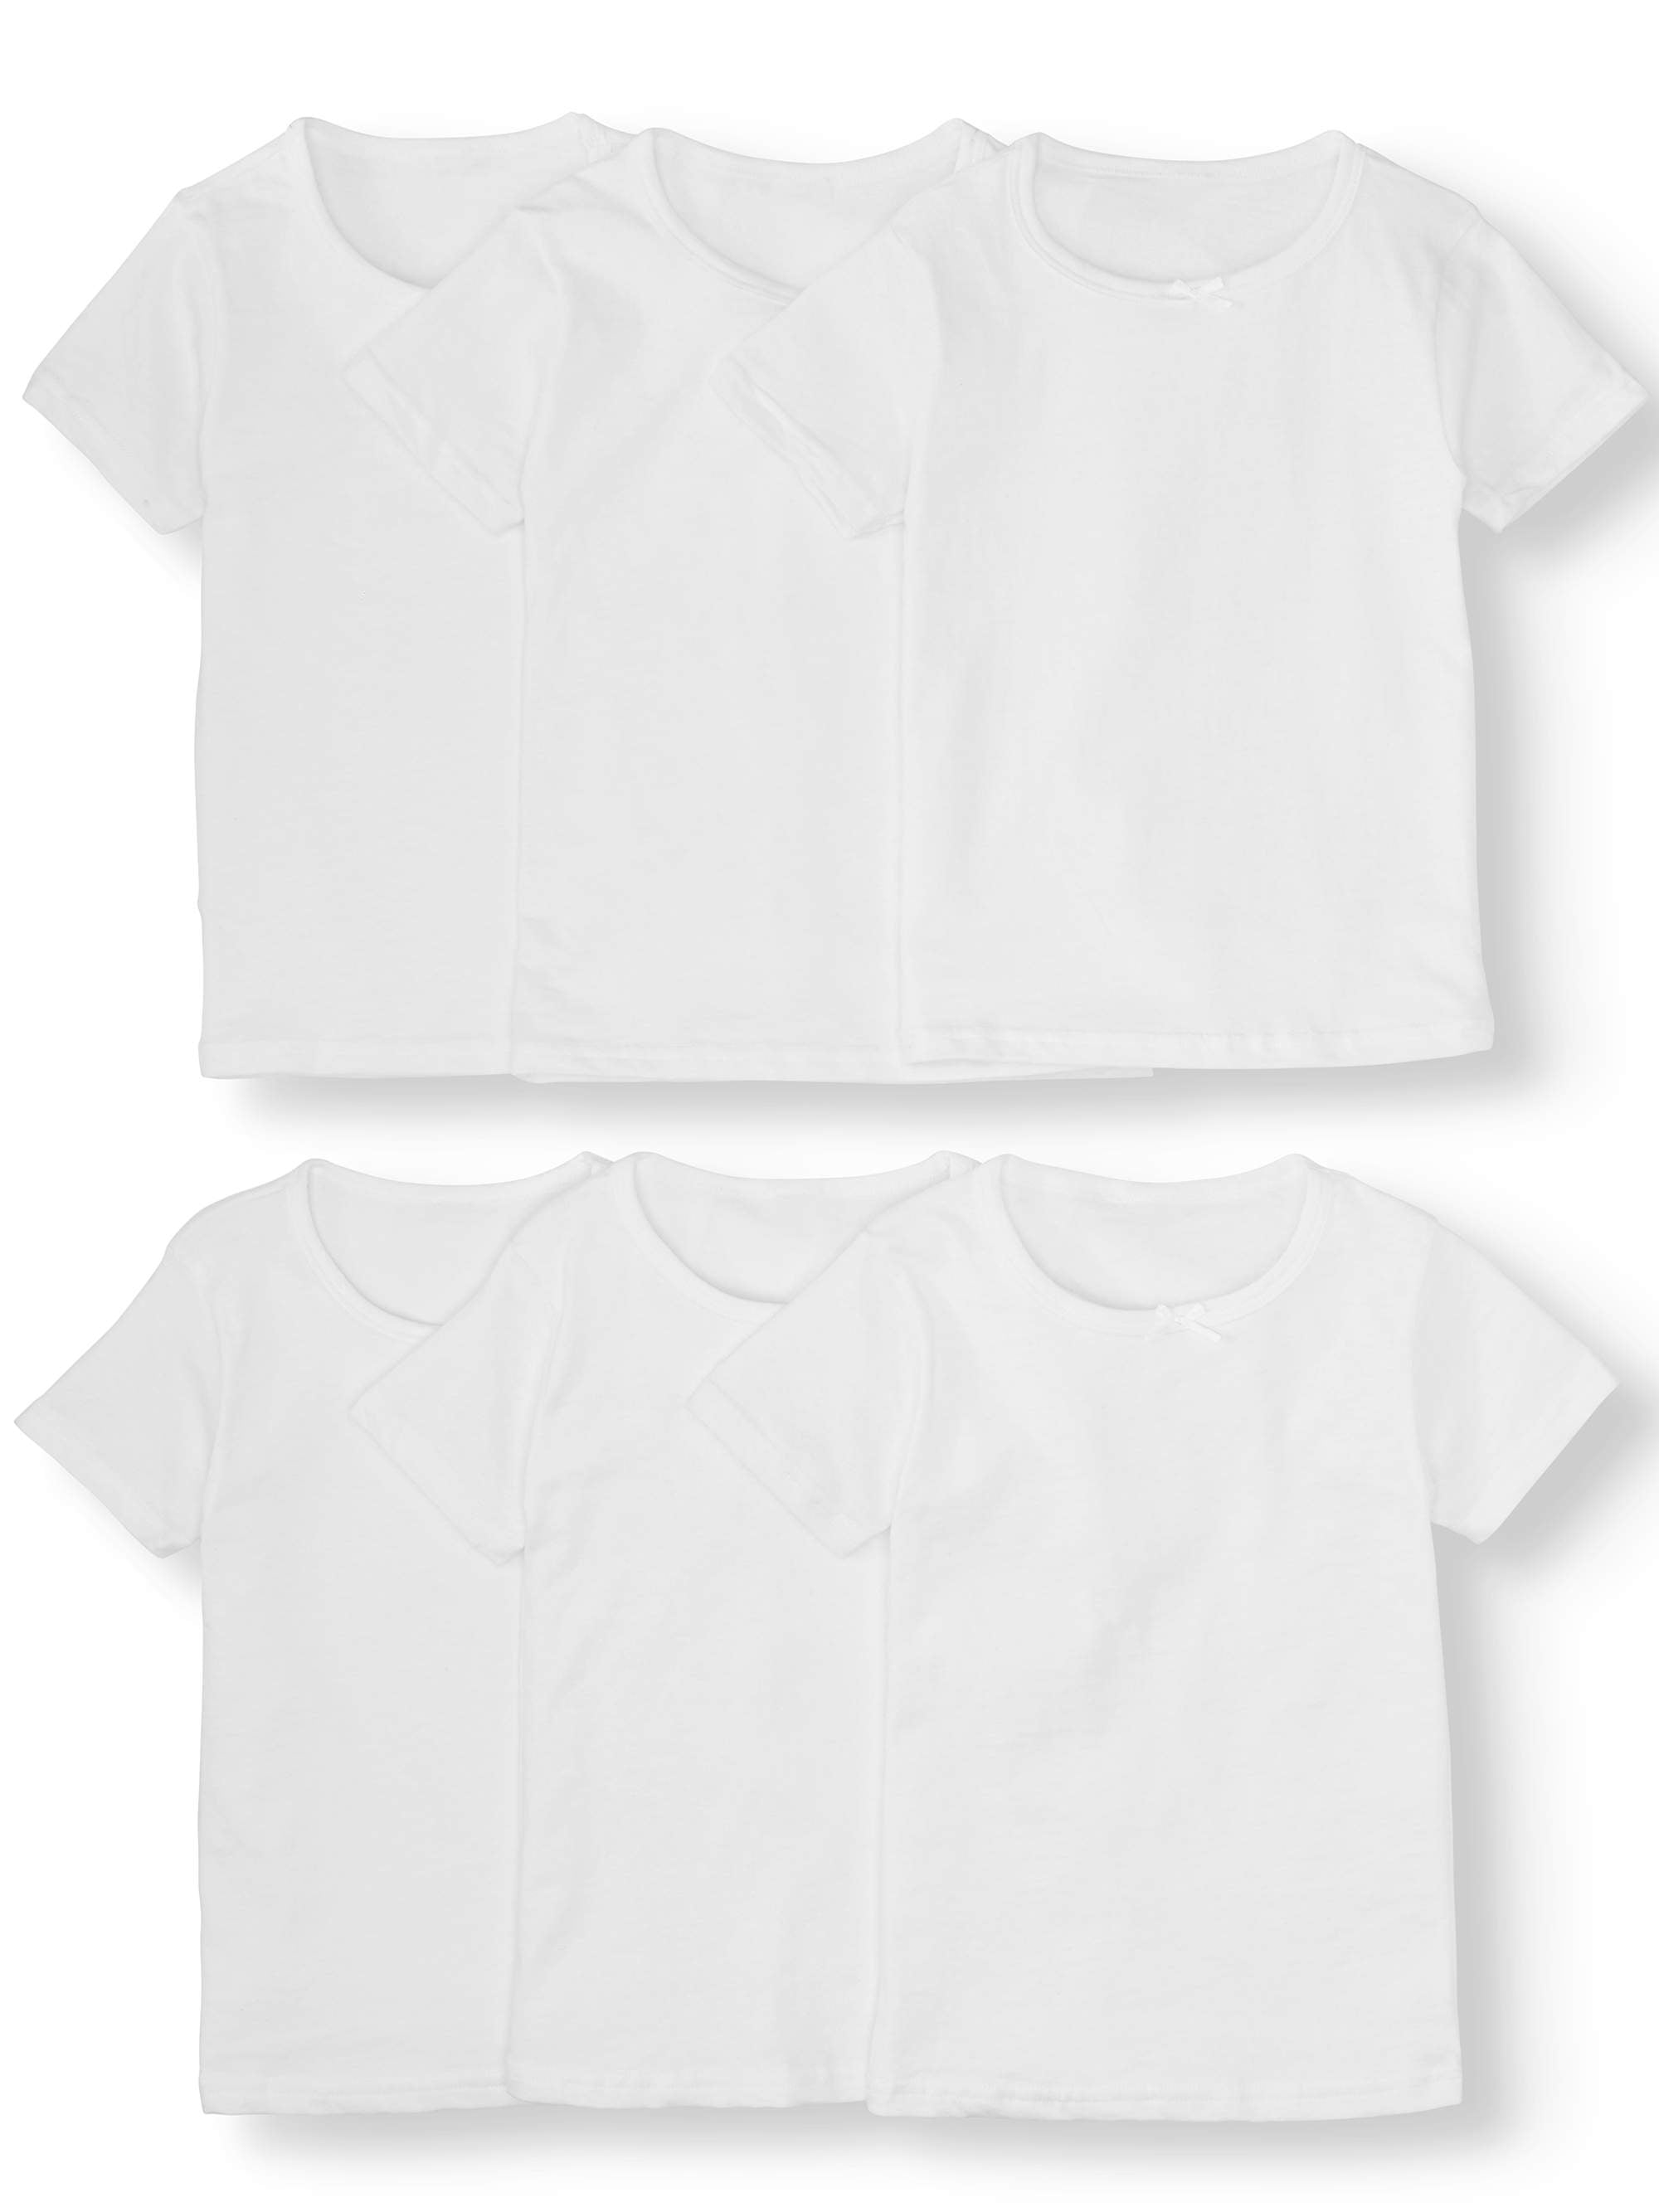 Chili Peppers Girls Tee Undershirts 6-Pack, Sizes S-xl, Girl's, Size: Medium (7-8), White